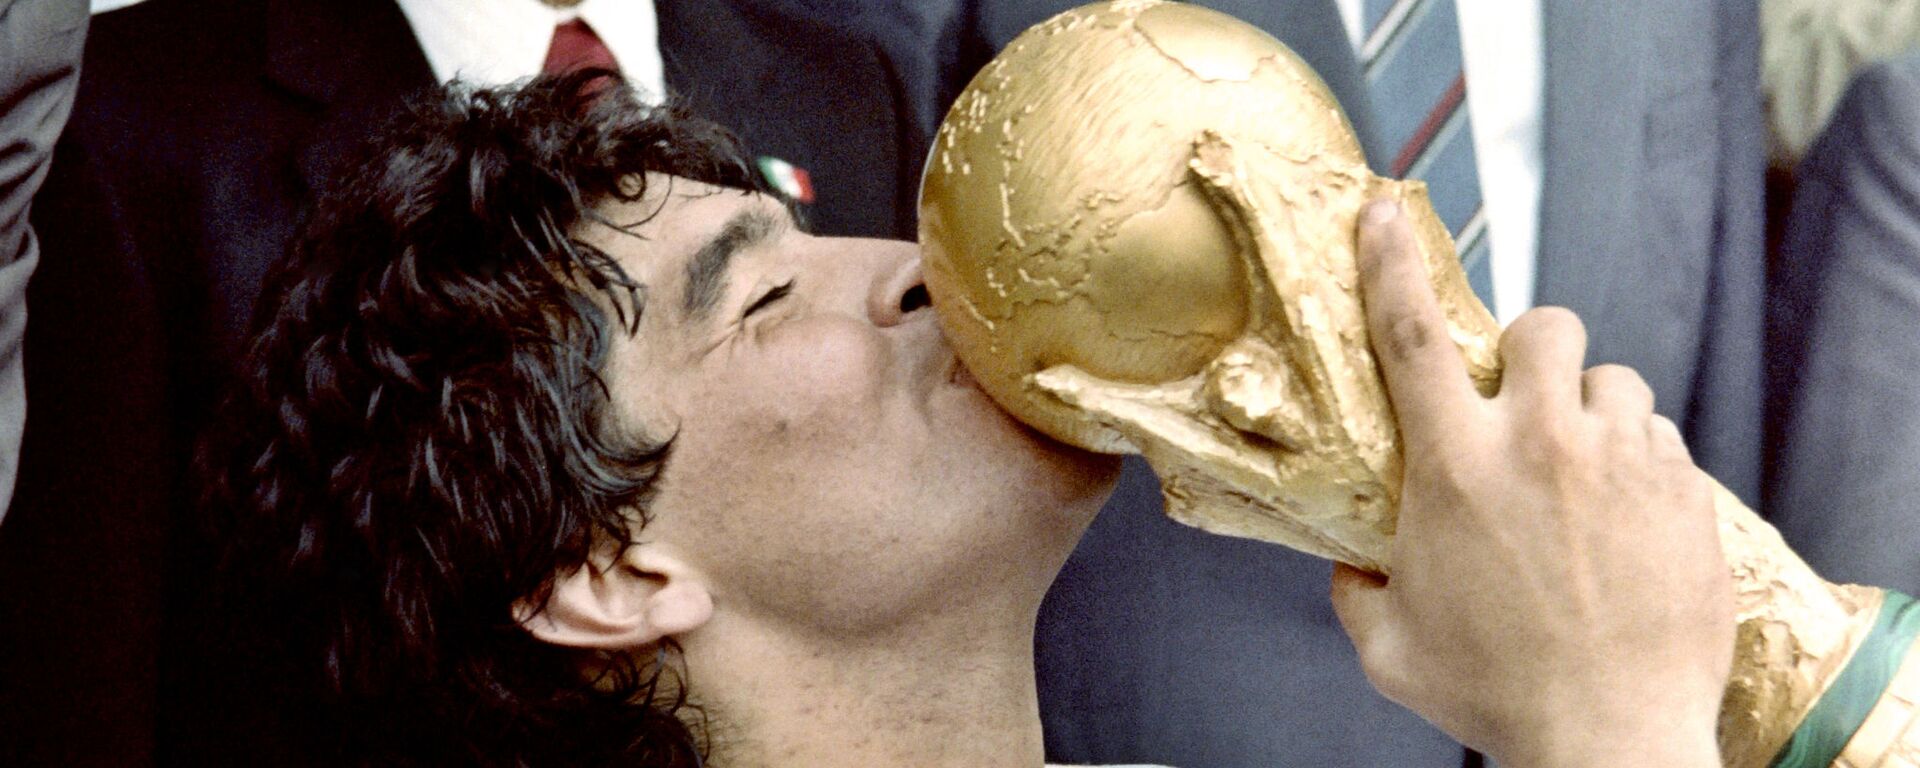 Diego Maradona durante la Copa Mundial en México, 1986 - Sputnik Mundo, 1920, 25.11.2020